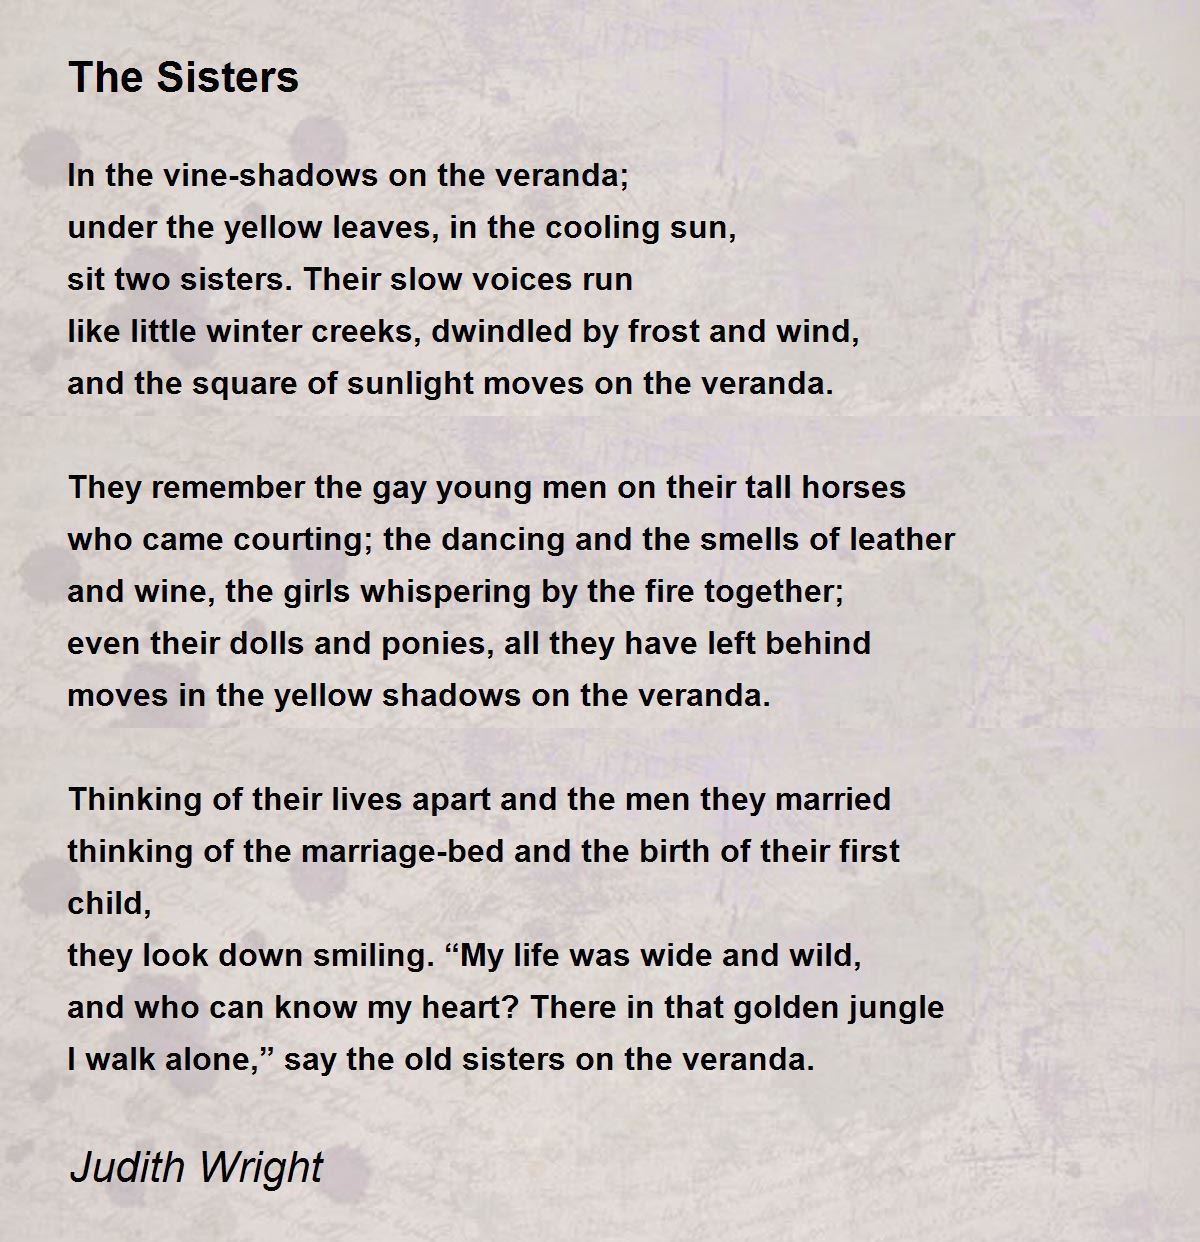 woman to man judith wright poem analysis